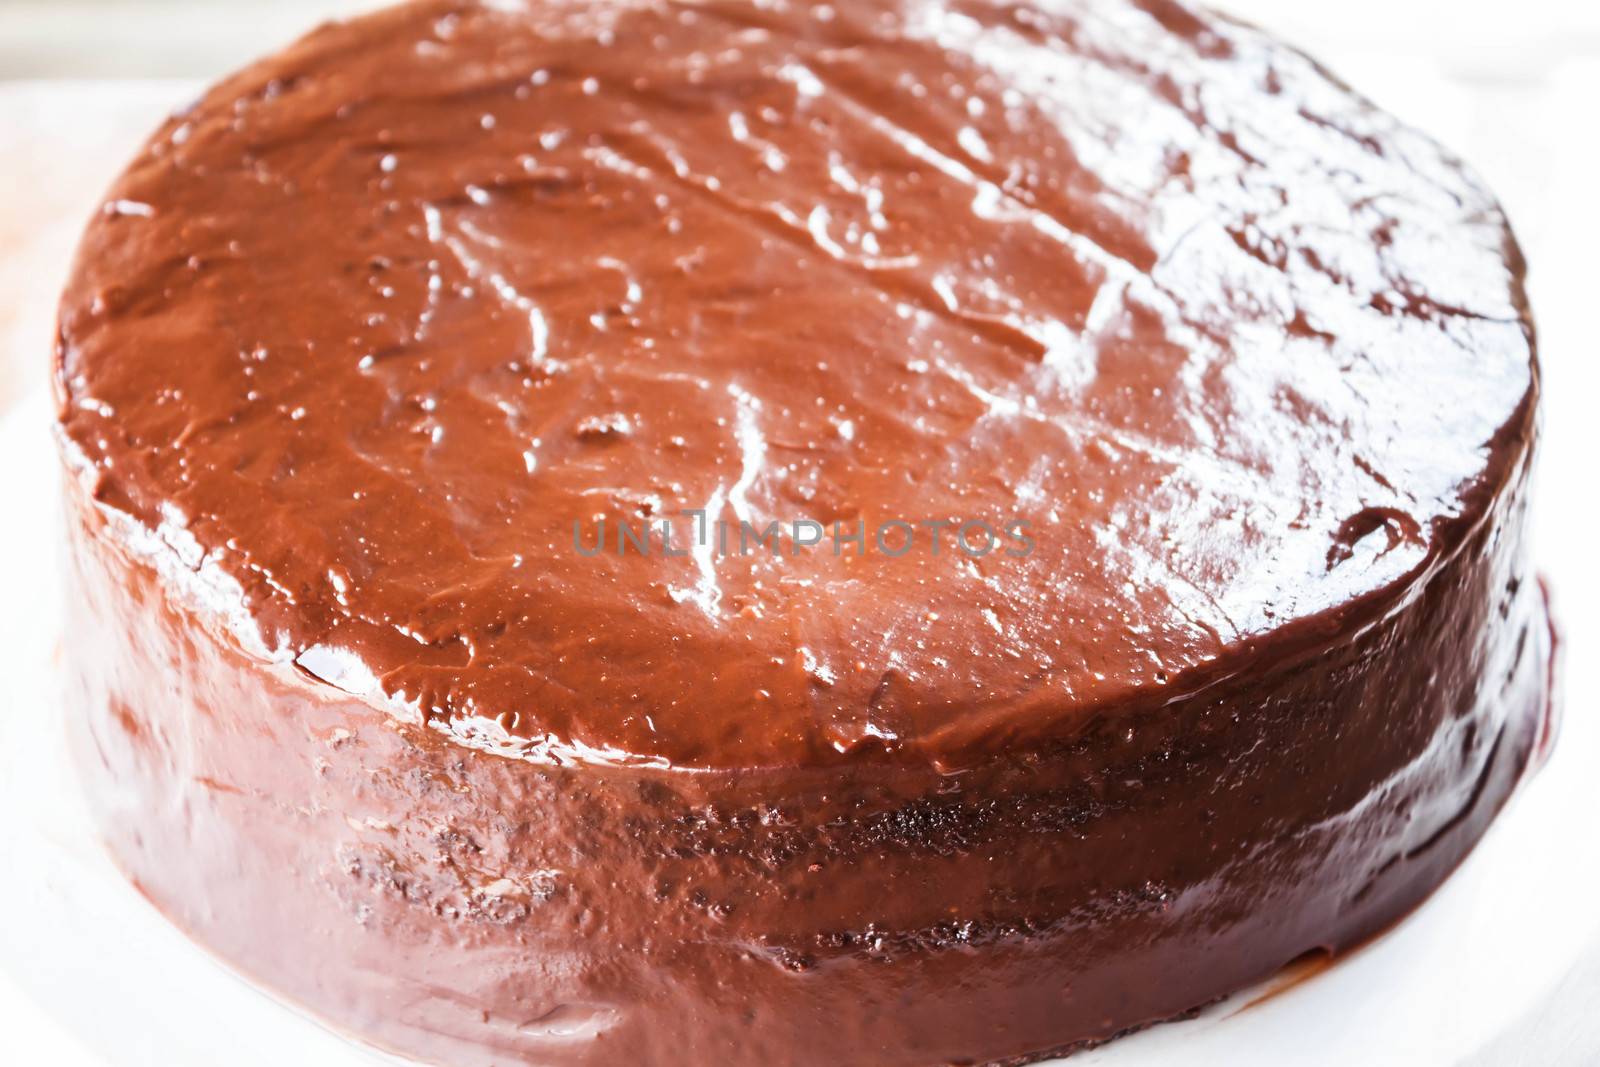 Close up of homemade chiffon chocolate cake